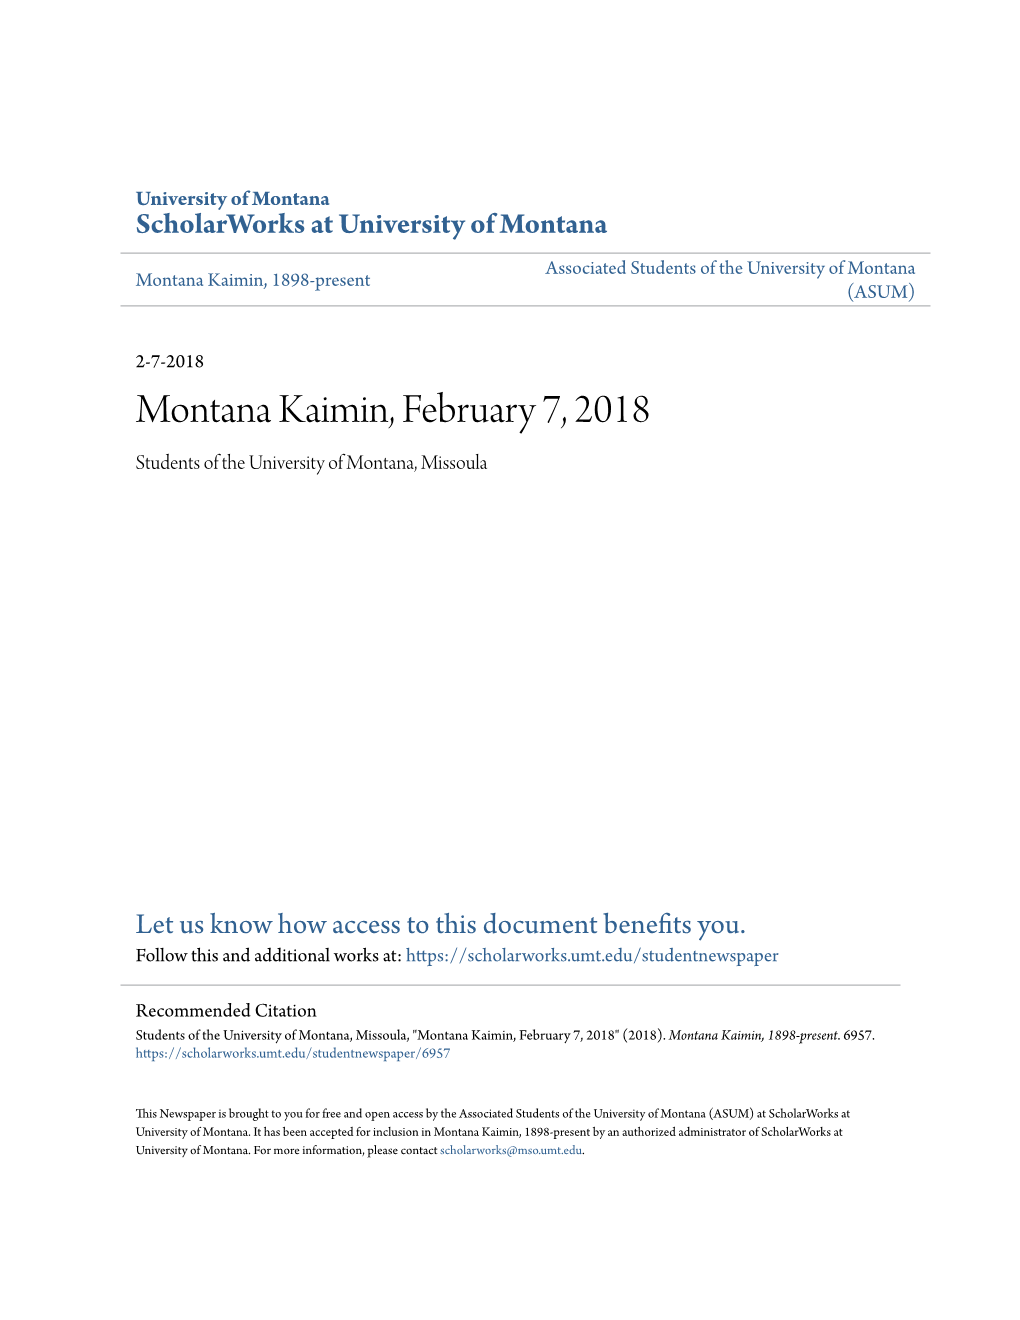 Montana Kaimin, February 7, 2018 Students of the University of Montana, Missoula